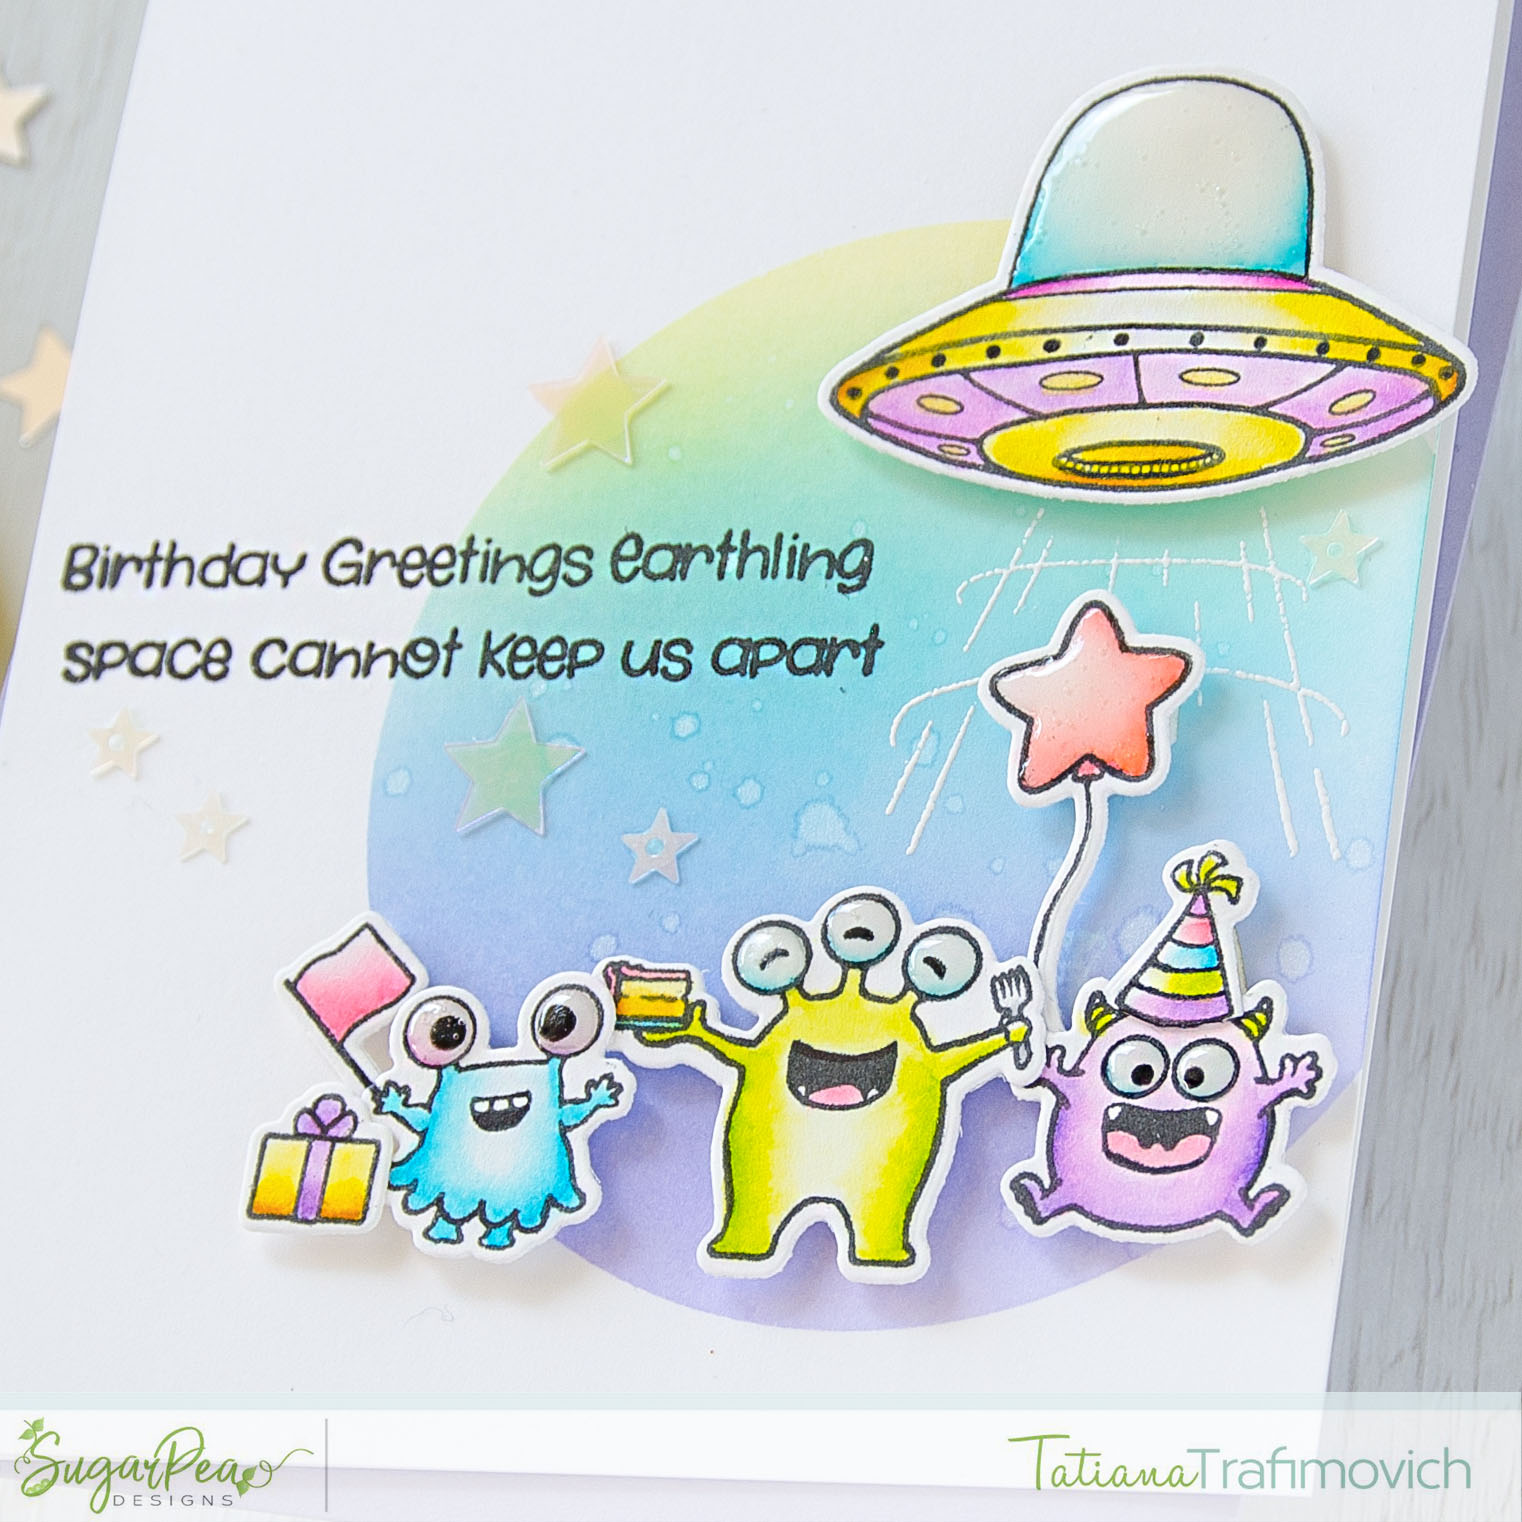 Birthday Greetings Earthling #handmade card by Tatiana Trafimovich #tatianacraftandart - Take Us To Your Cake stamp set by SugarPea Designs #sugarpeadesigns